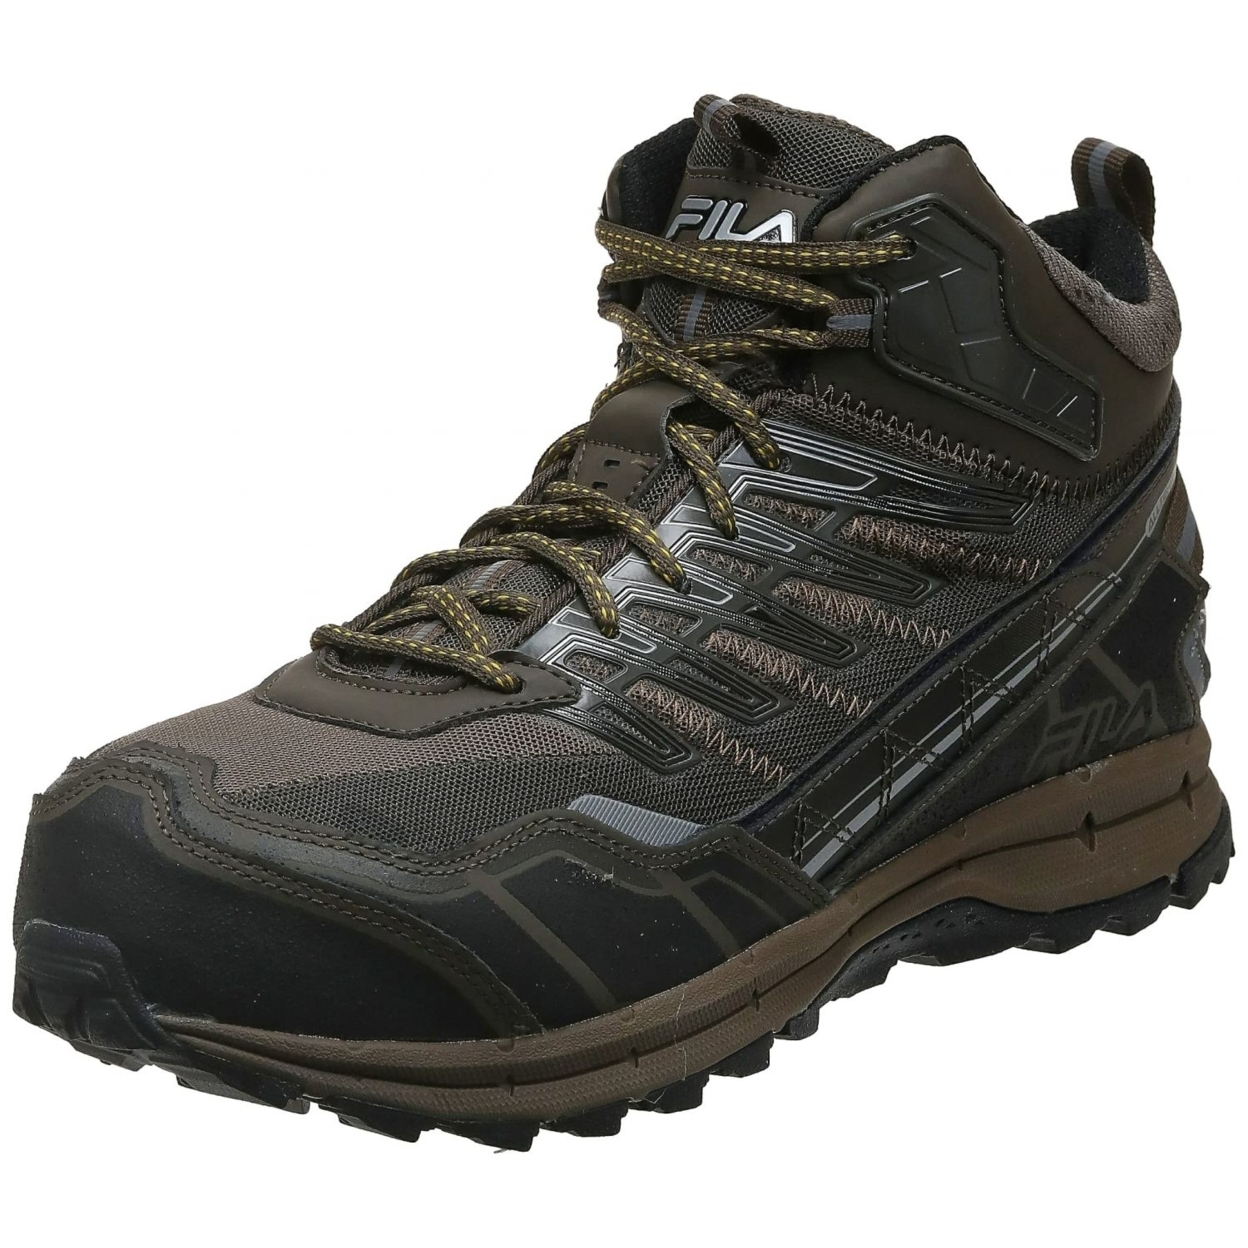 Fila Men's Hail Storm 3 Mid Composite Toe Trail Work Shoes Hiking WNUT/MBRN/GFUS - WNUT/MBRN/GFUS, 10